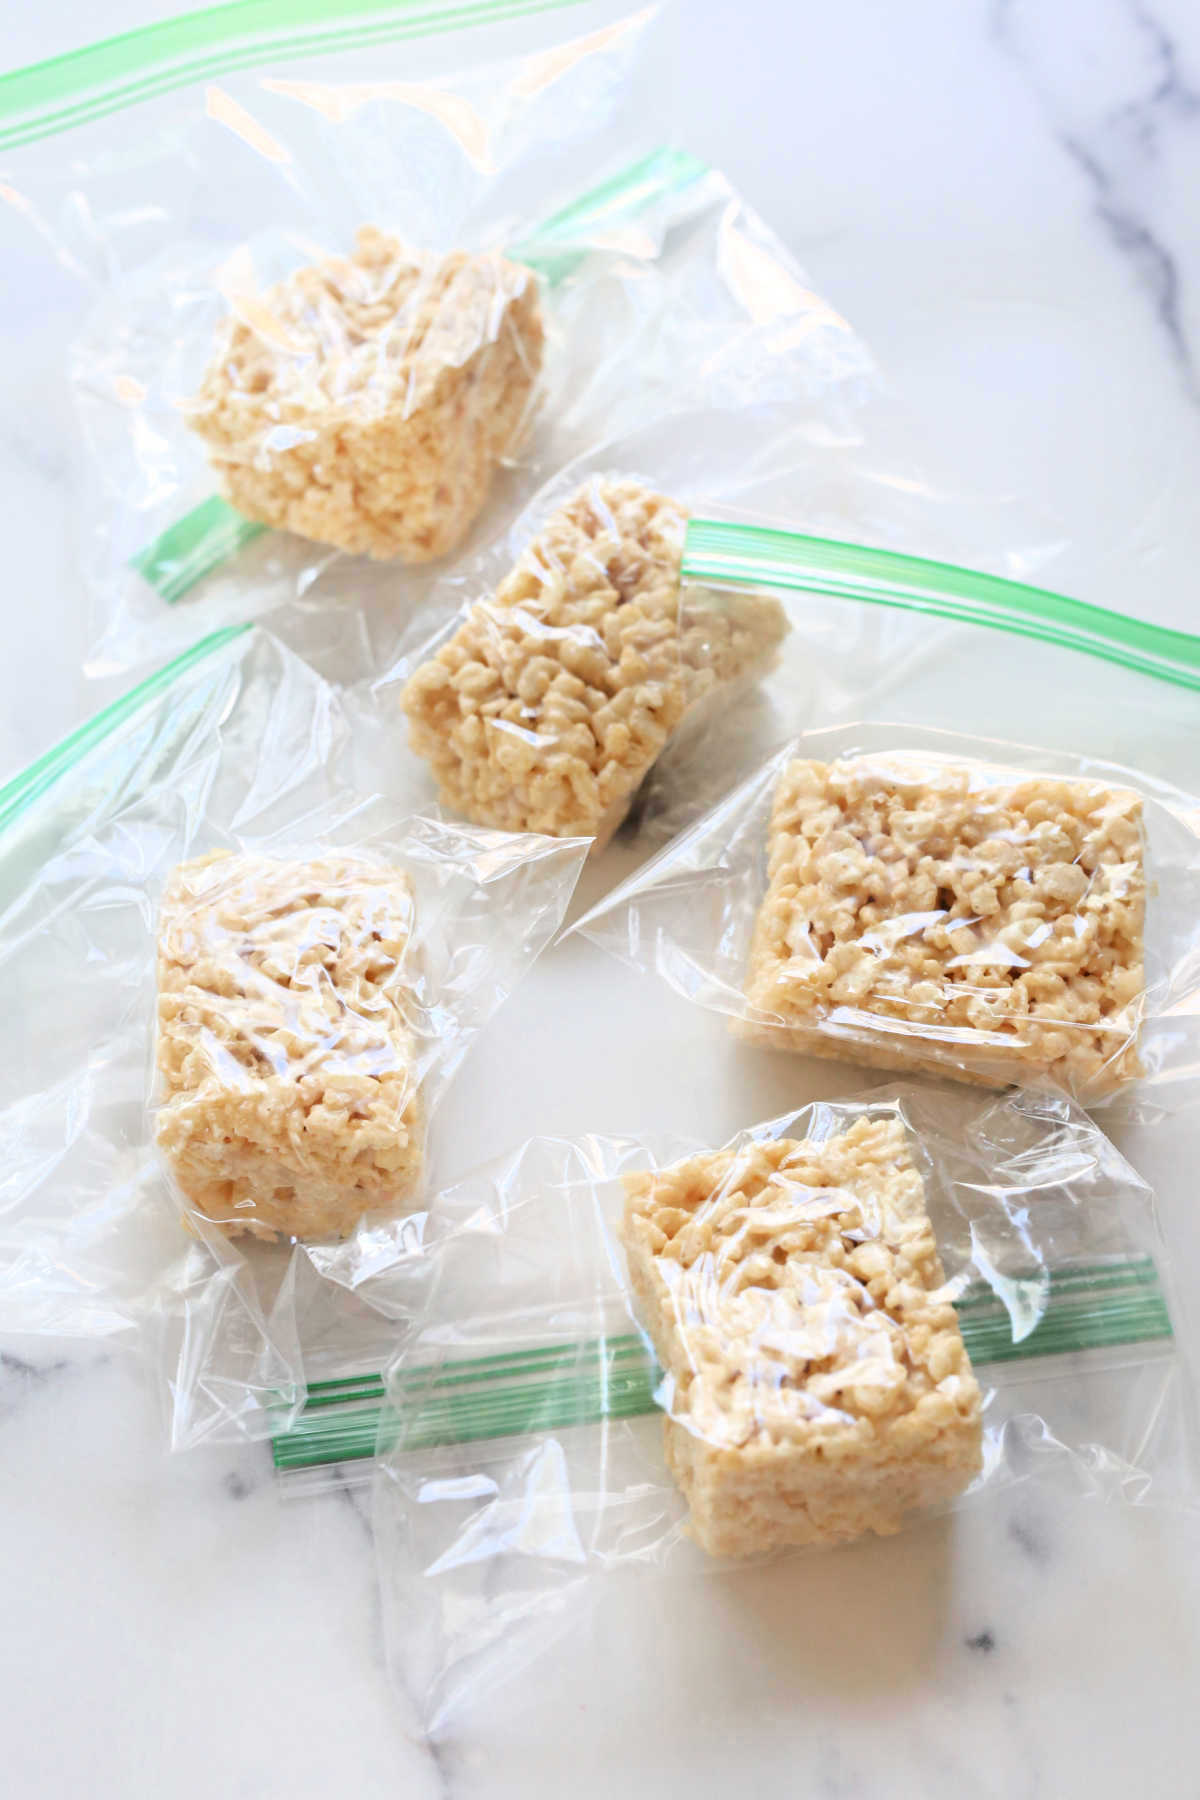 homemade rice crispy treats in zip bags for healthy snacks